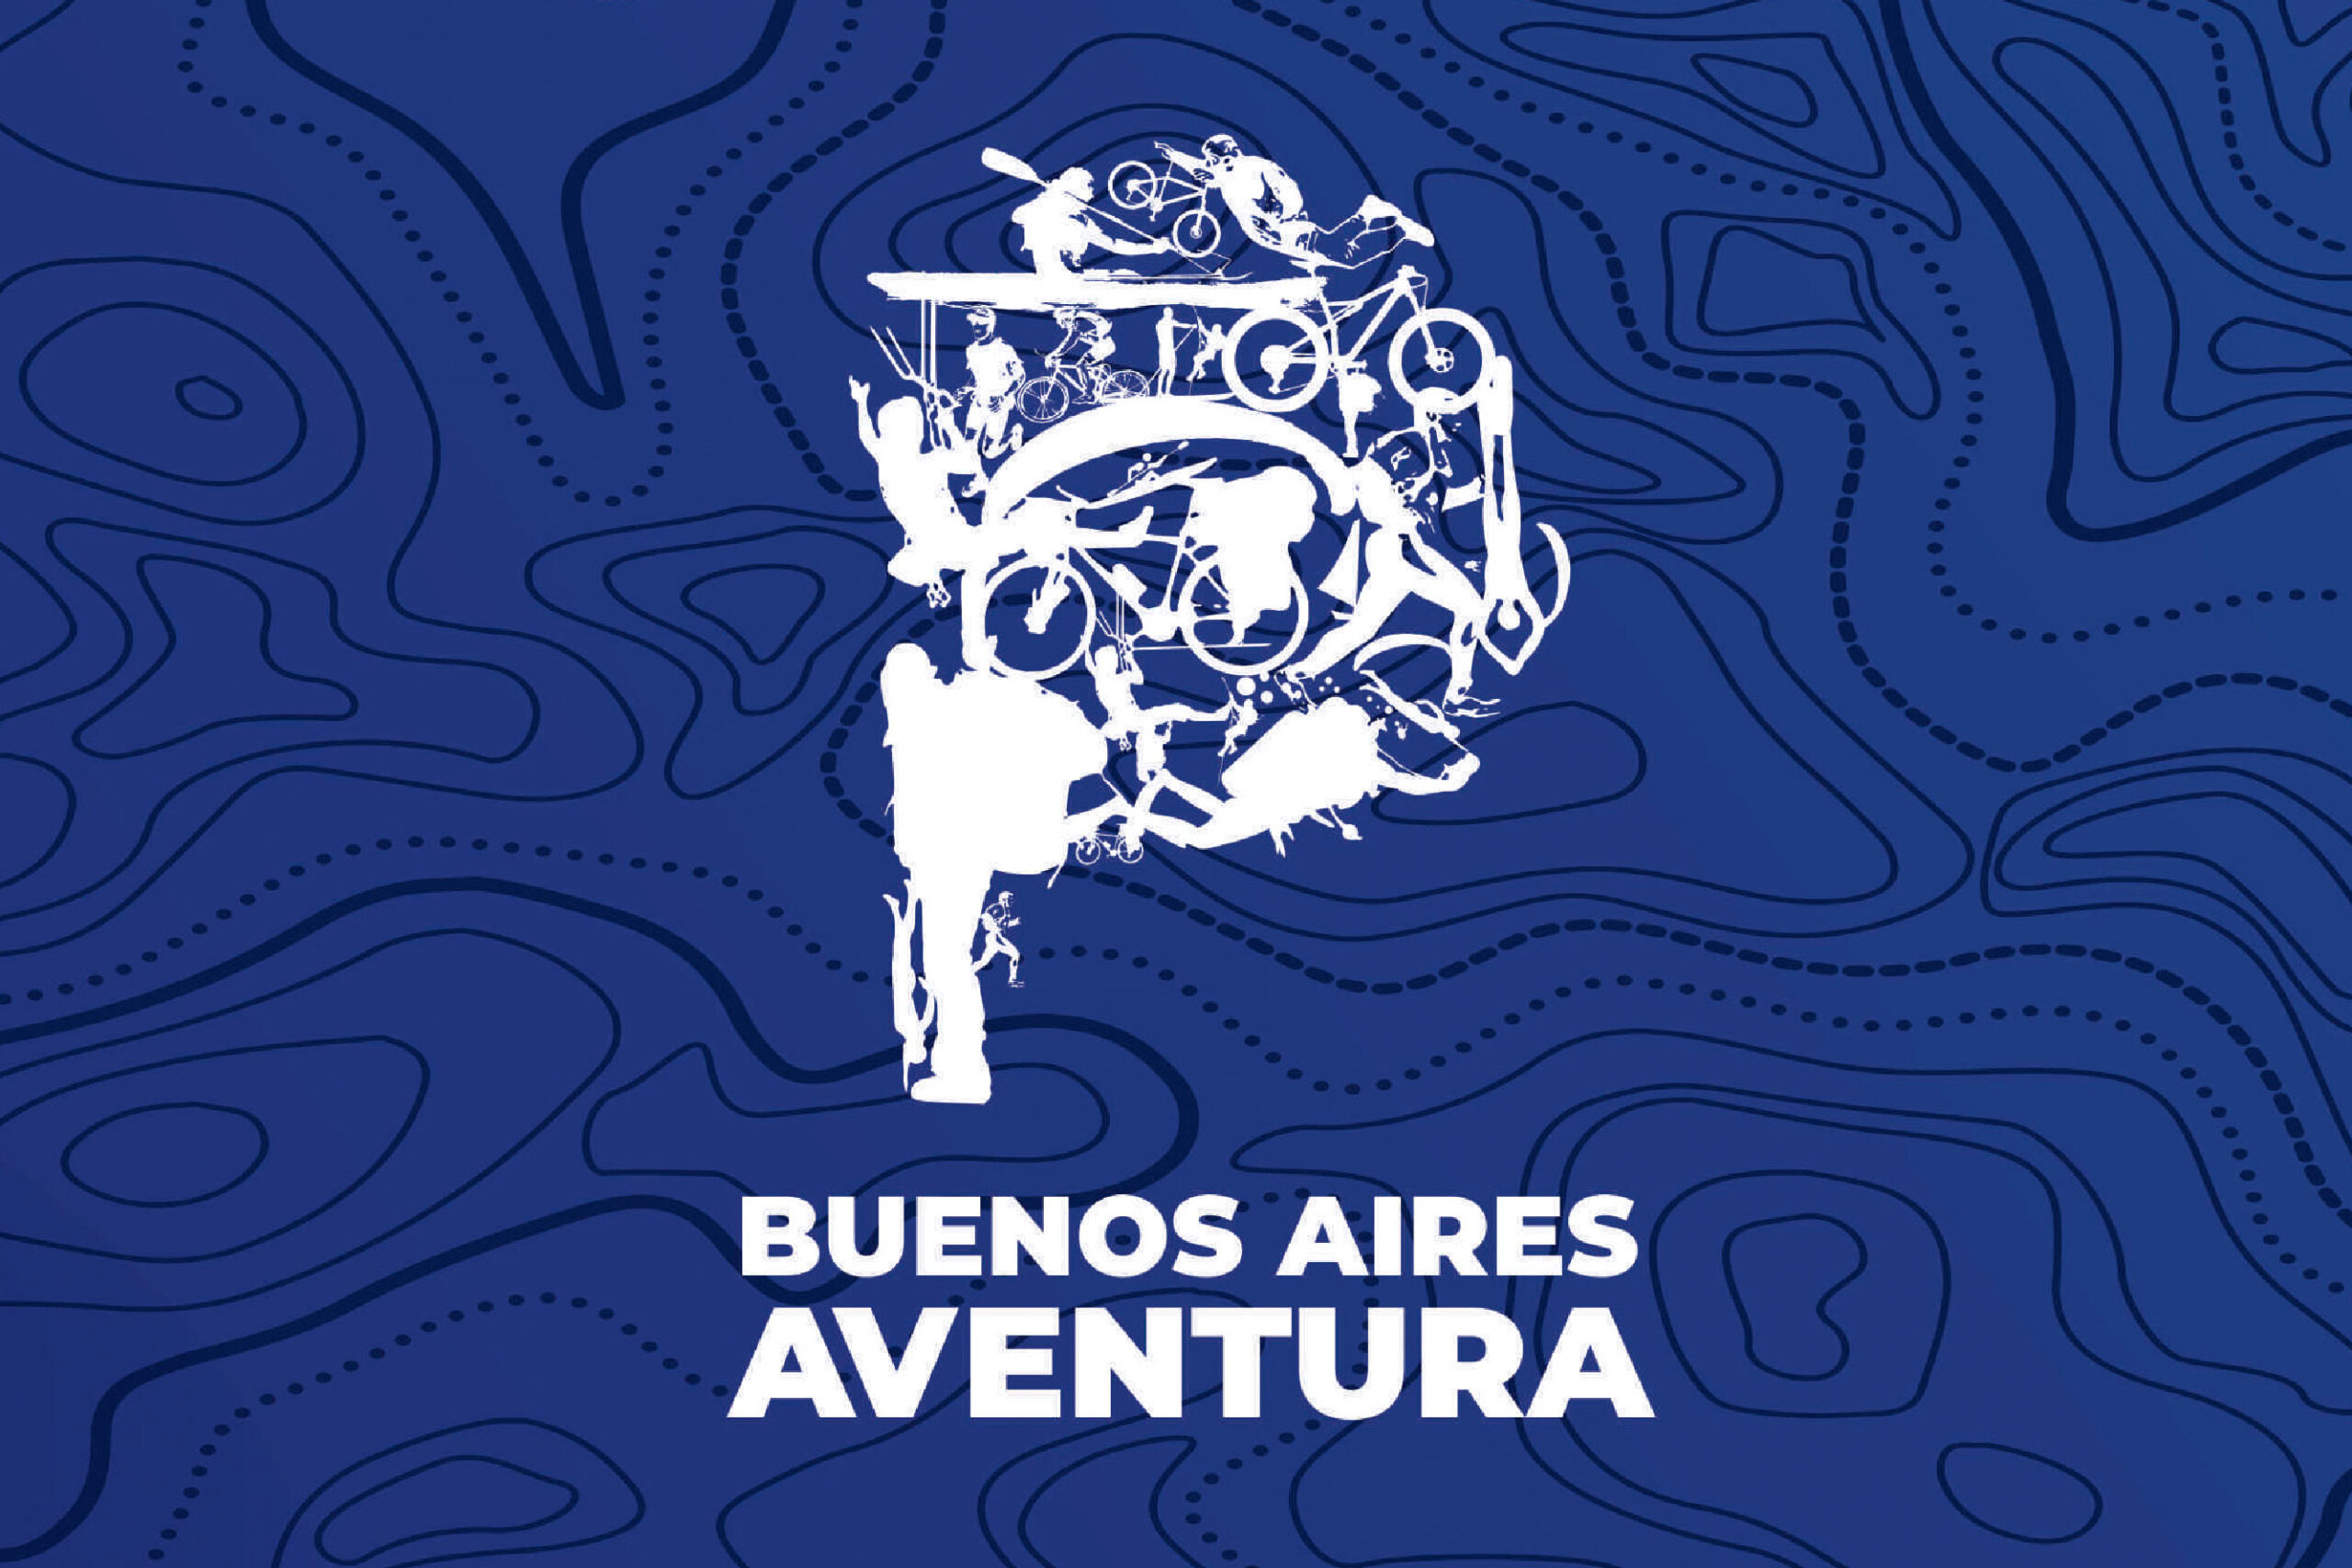 Buenos Aires Aventura